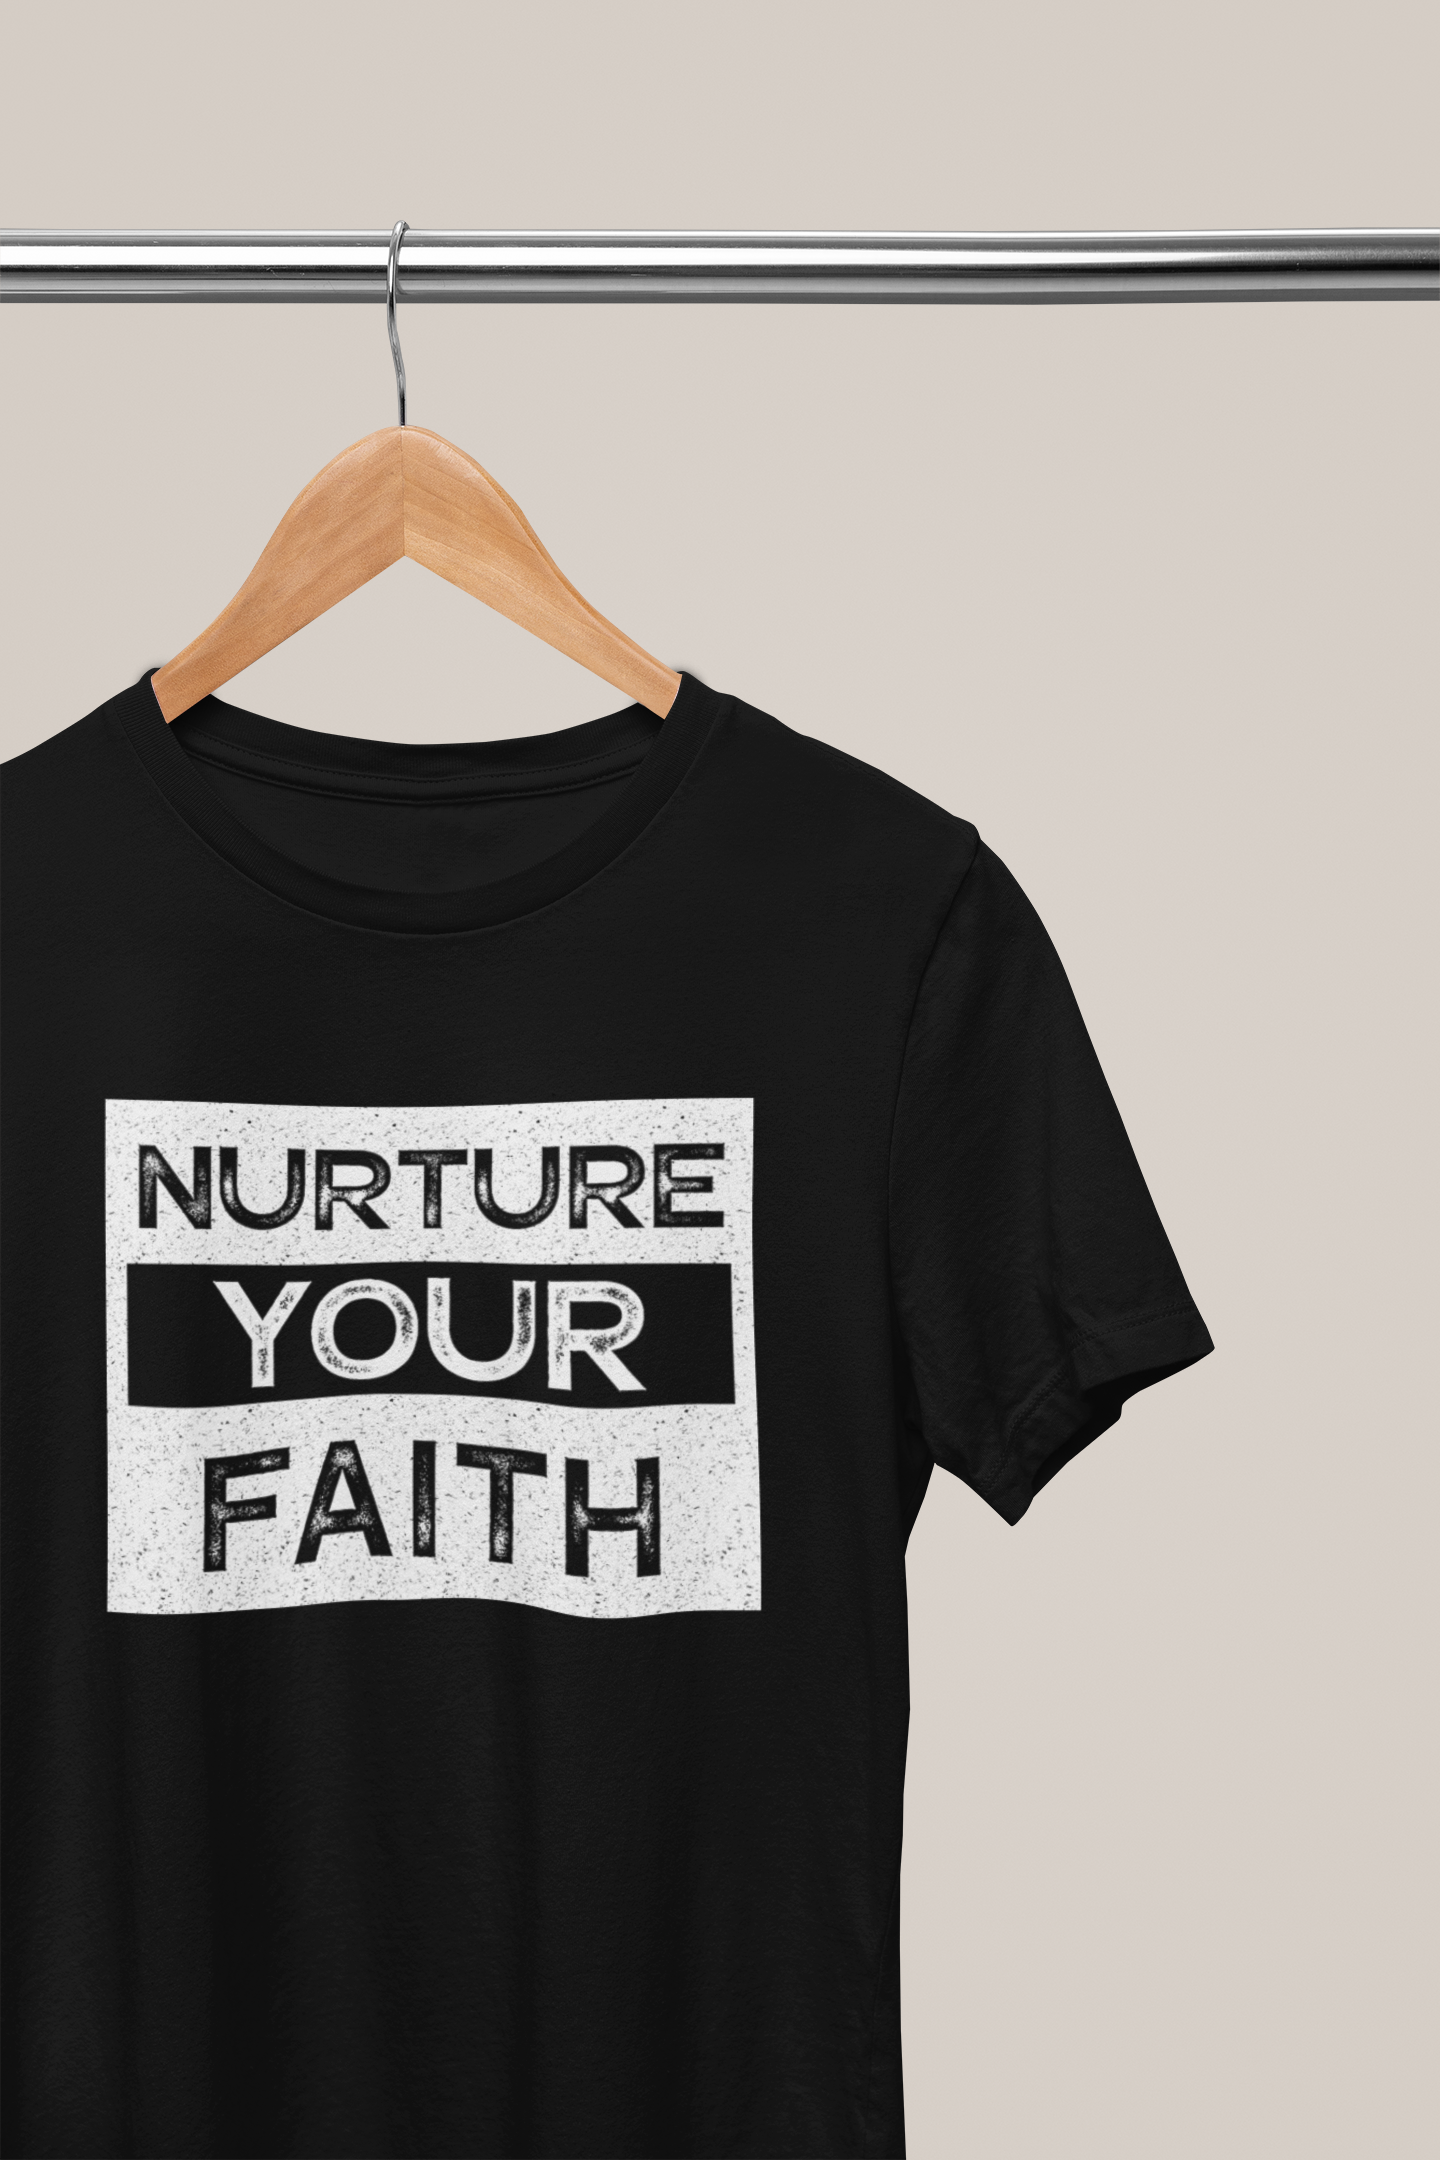 Nurture Your Faith, Hoodies, Sweatshirts, Tees, and Mugs